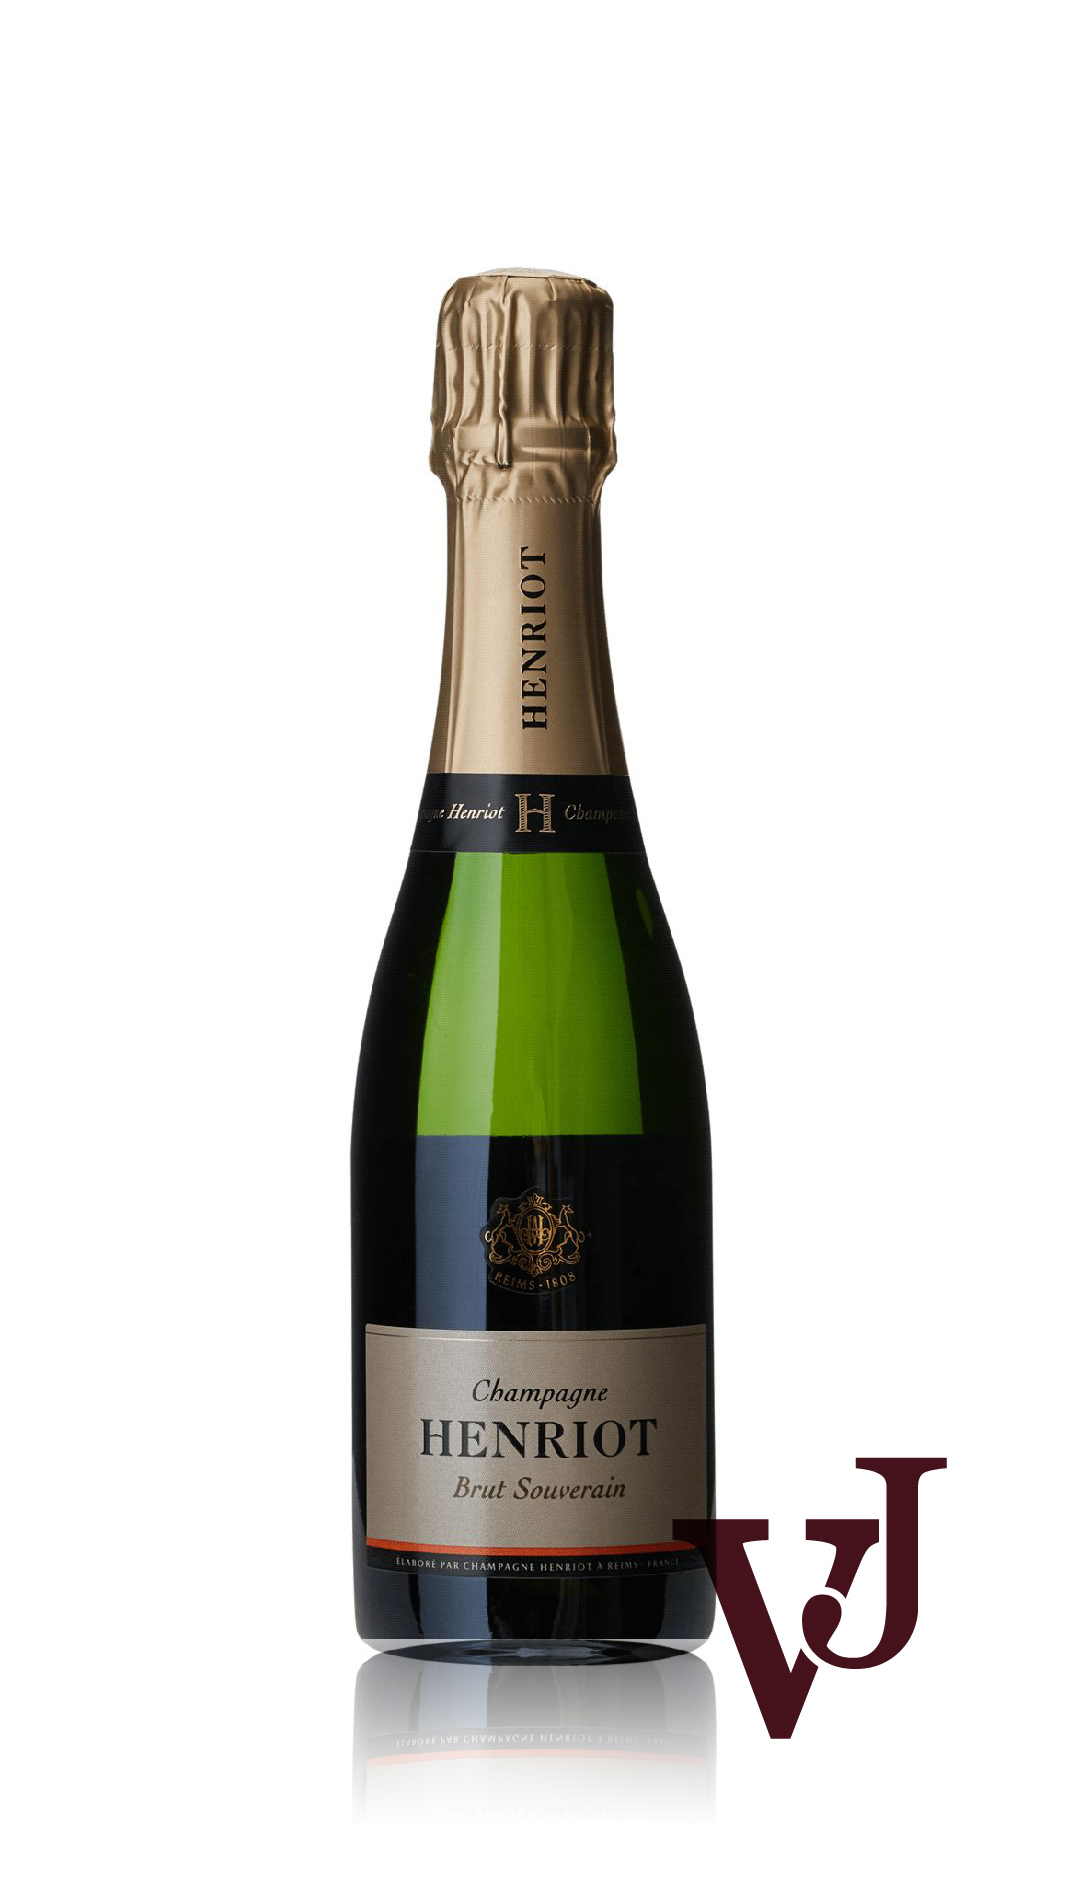 Mousserande Vin - Henriot artikel nummer 8146602 från producenten Champagne Henriot från området Frankrike